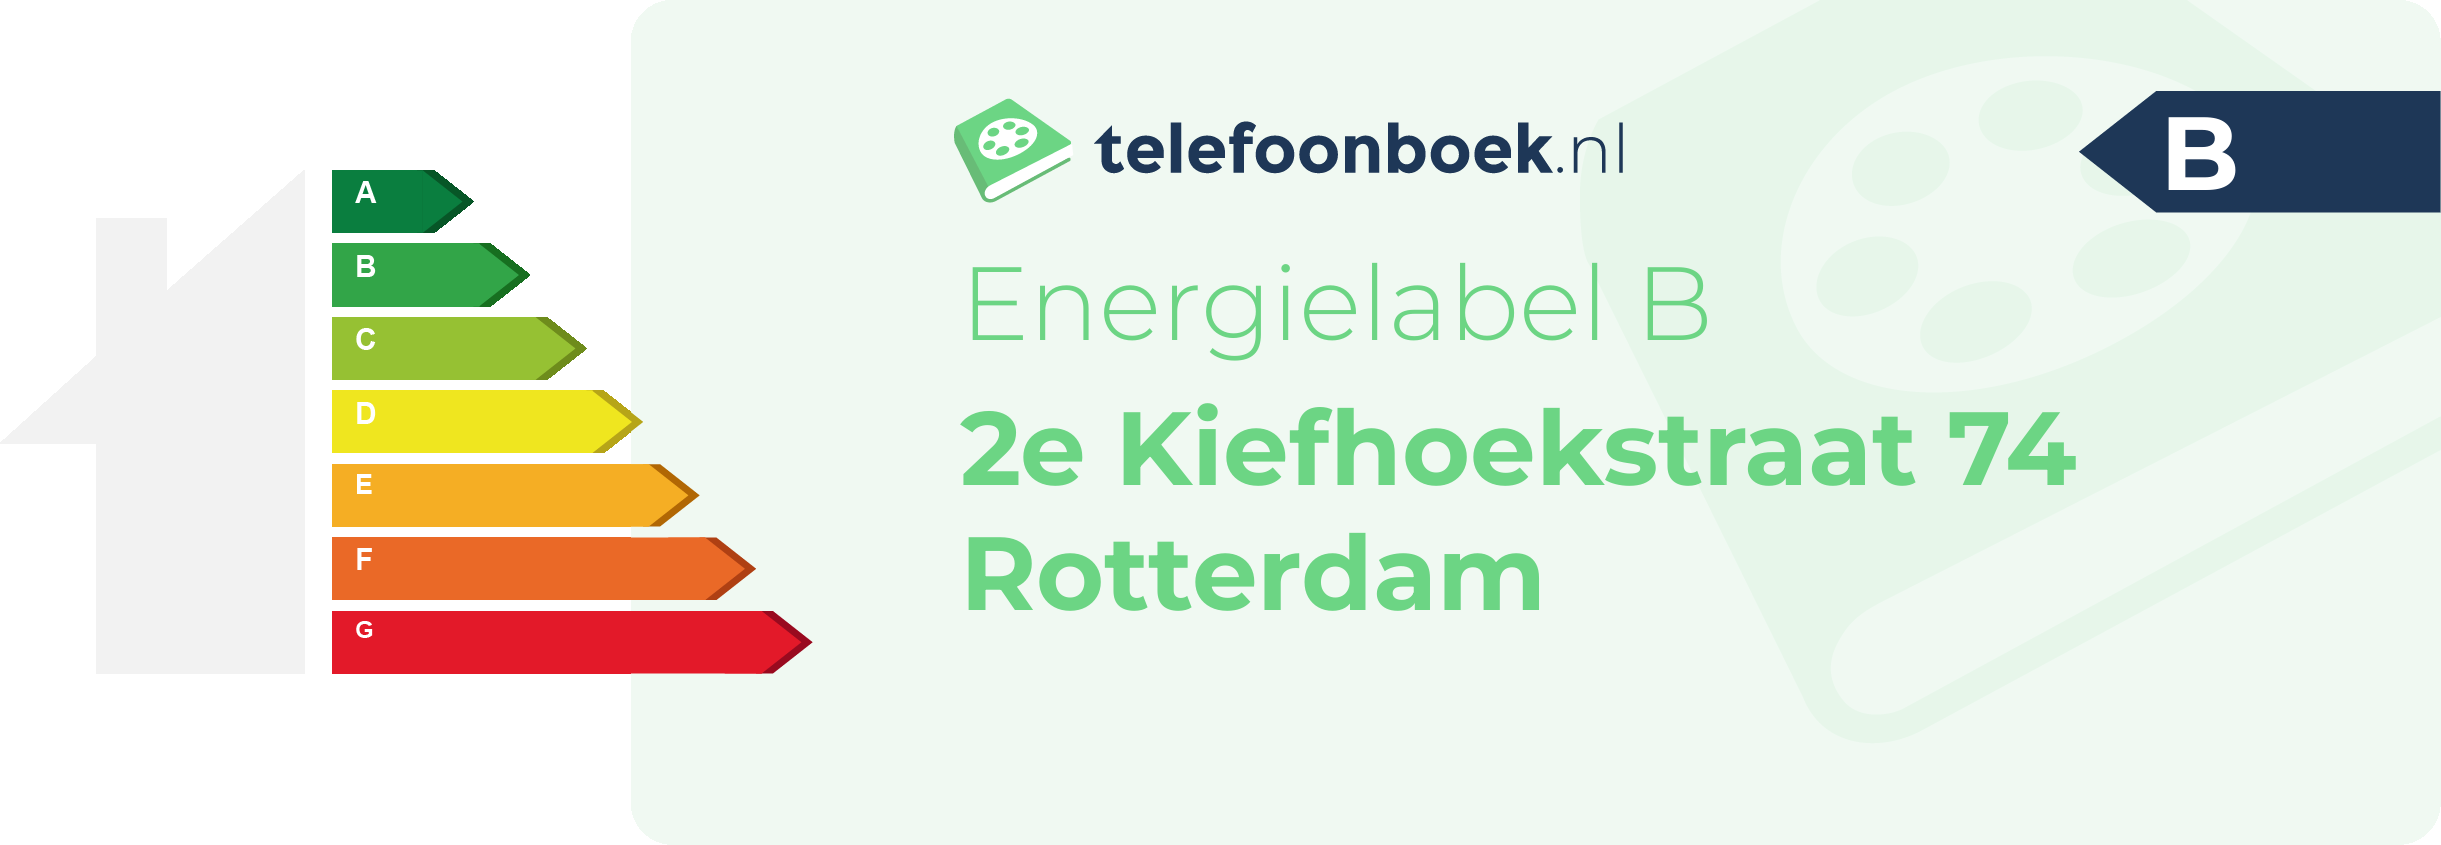 Energielabel 2e Kiefhoekstraat 74 Rotterdam